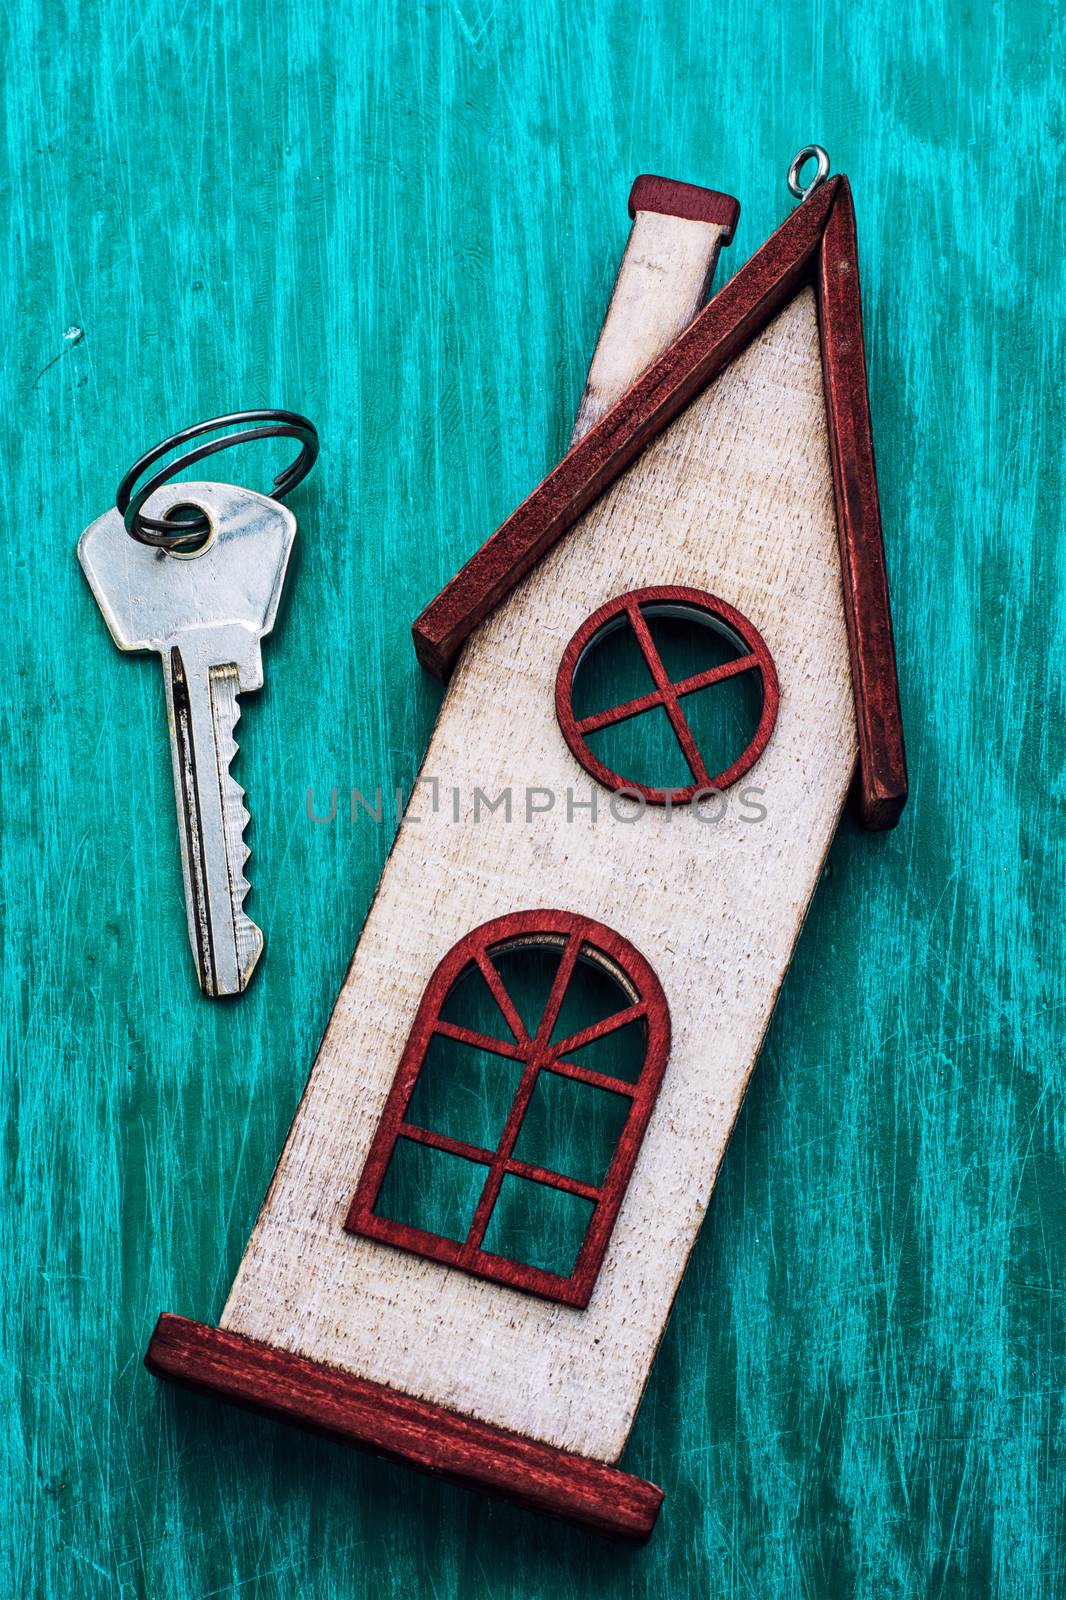 symbolic house and key on wooden background turquoise